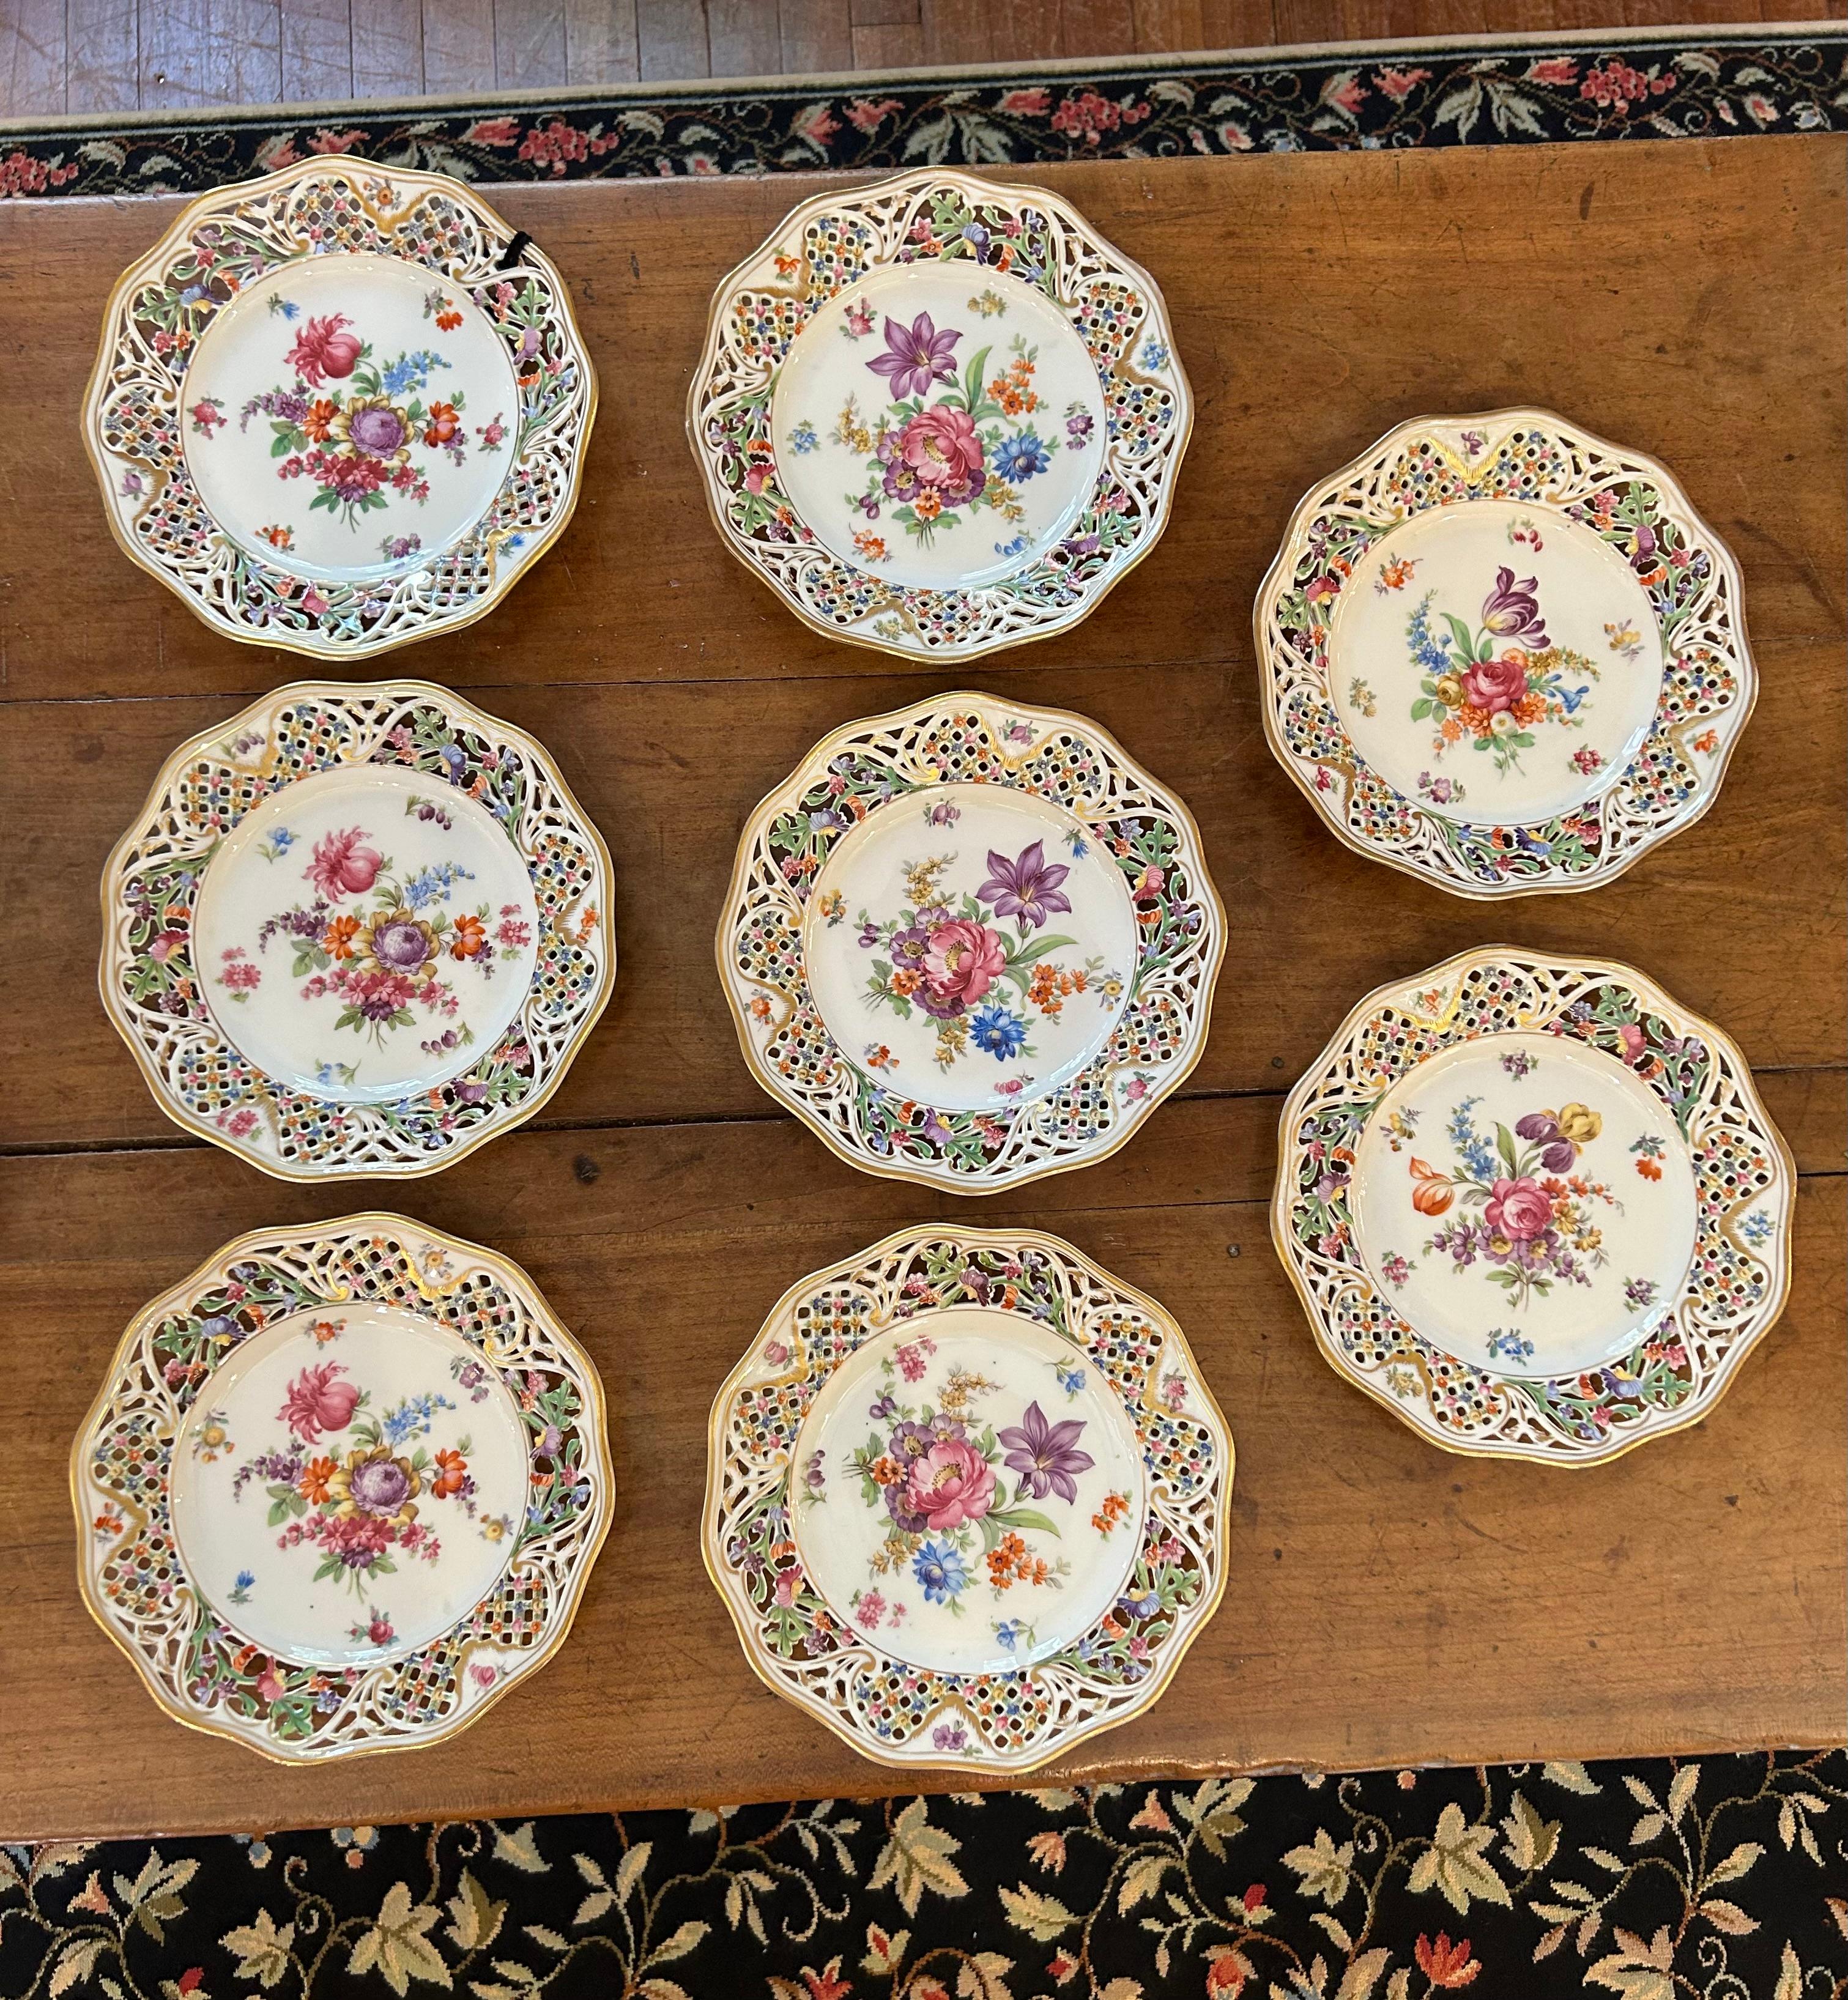 1932-1944 Set of 8 Dessert Plates by Schumann, Dresden & Bavaria periods For Sale 5